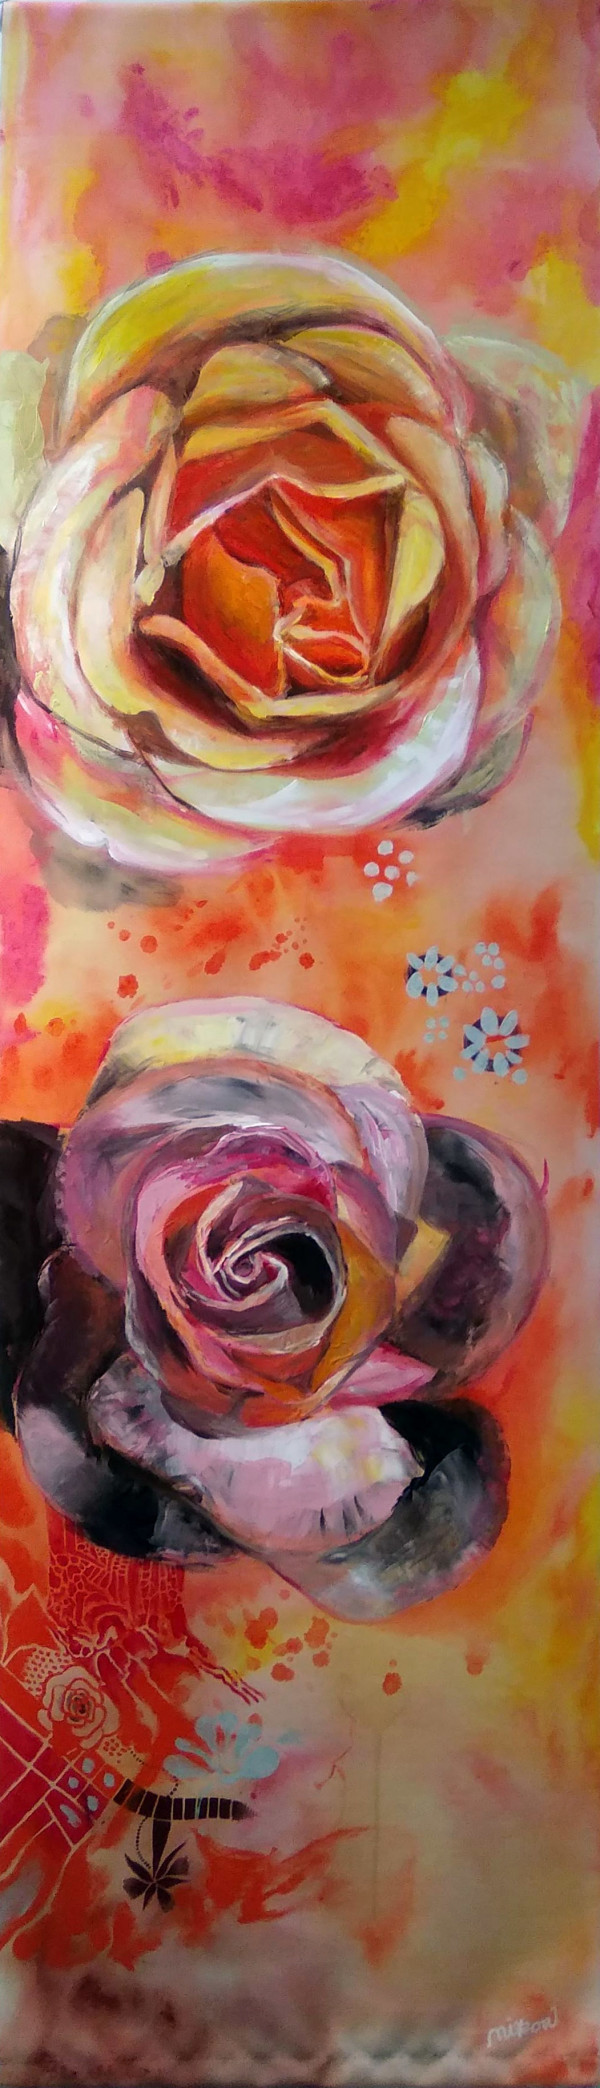 Orange Scroll (Roses) by MIRROR Art Duo